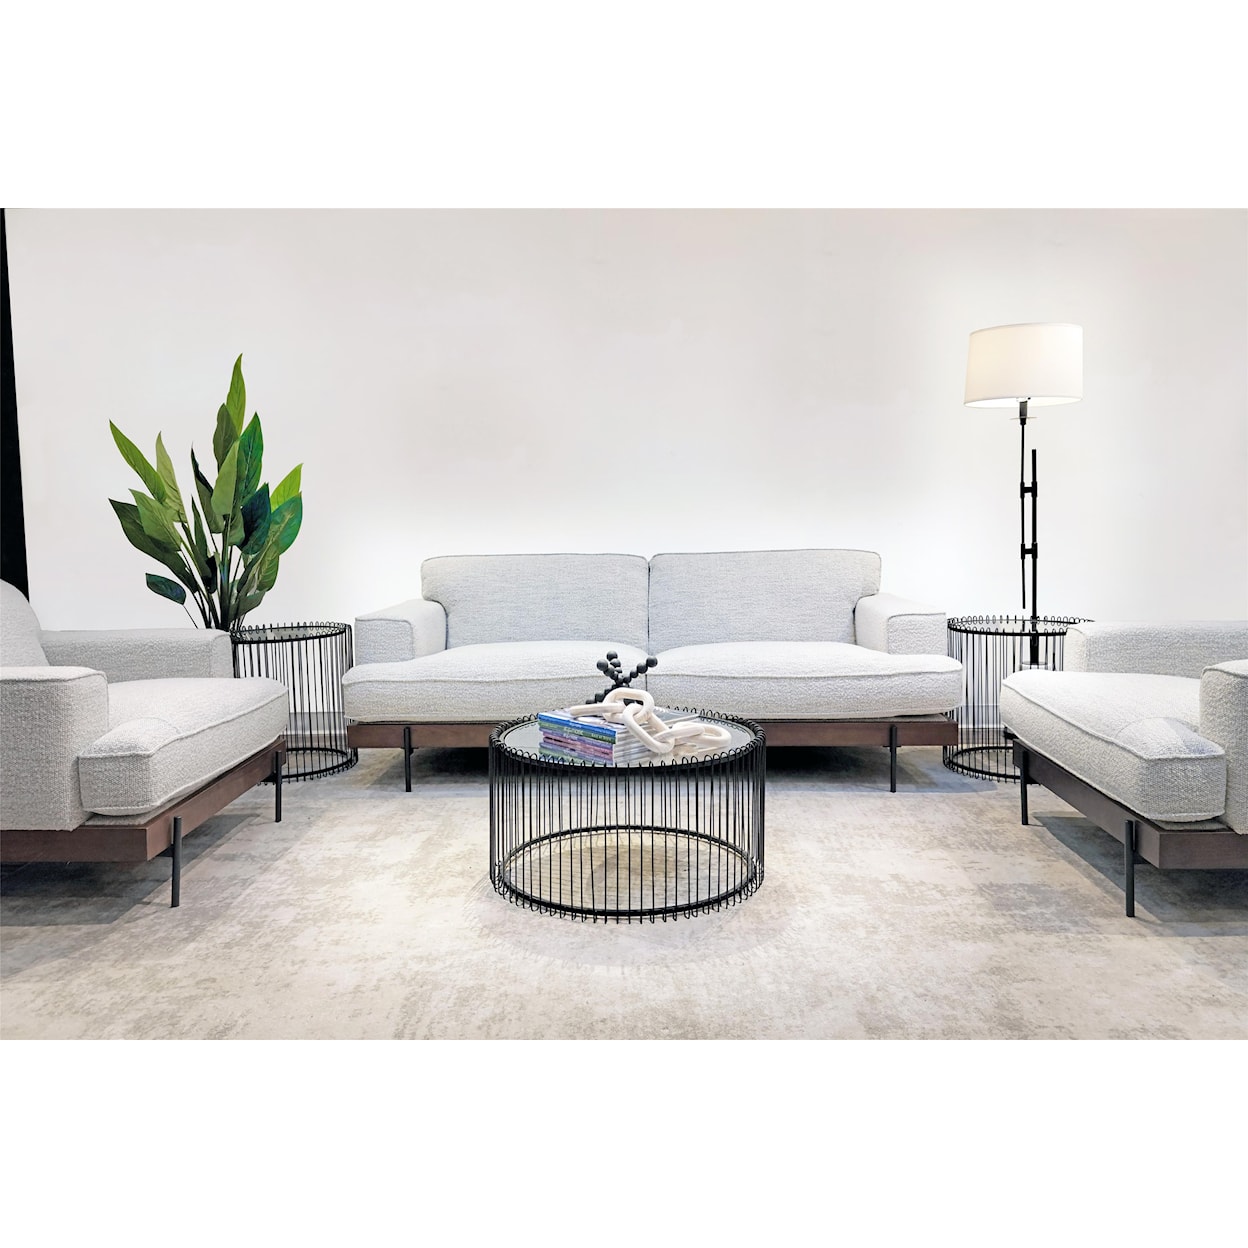 Maric Furniture Merino Industrial Sofa